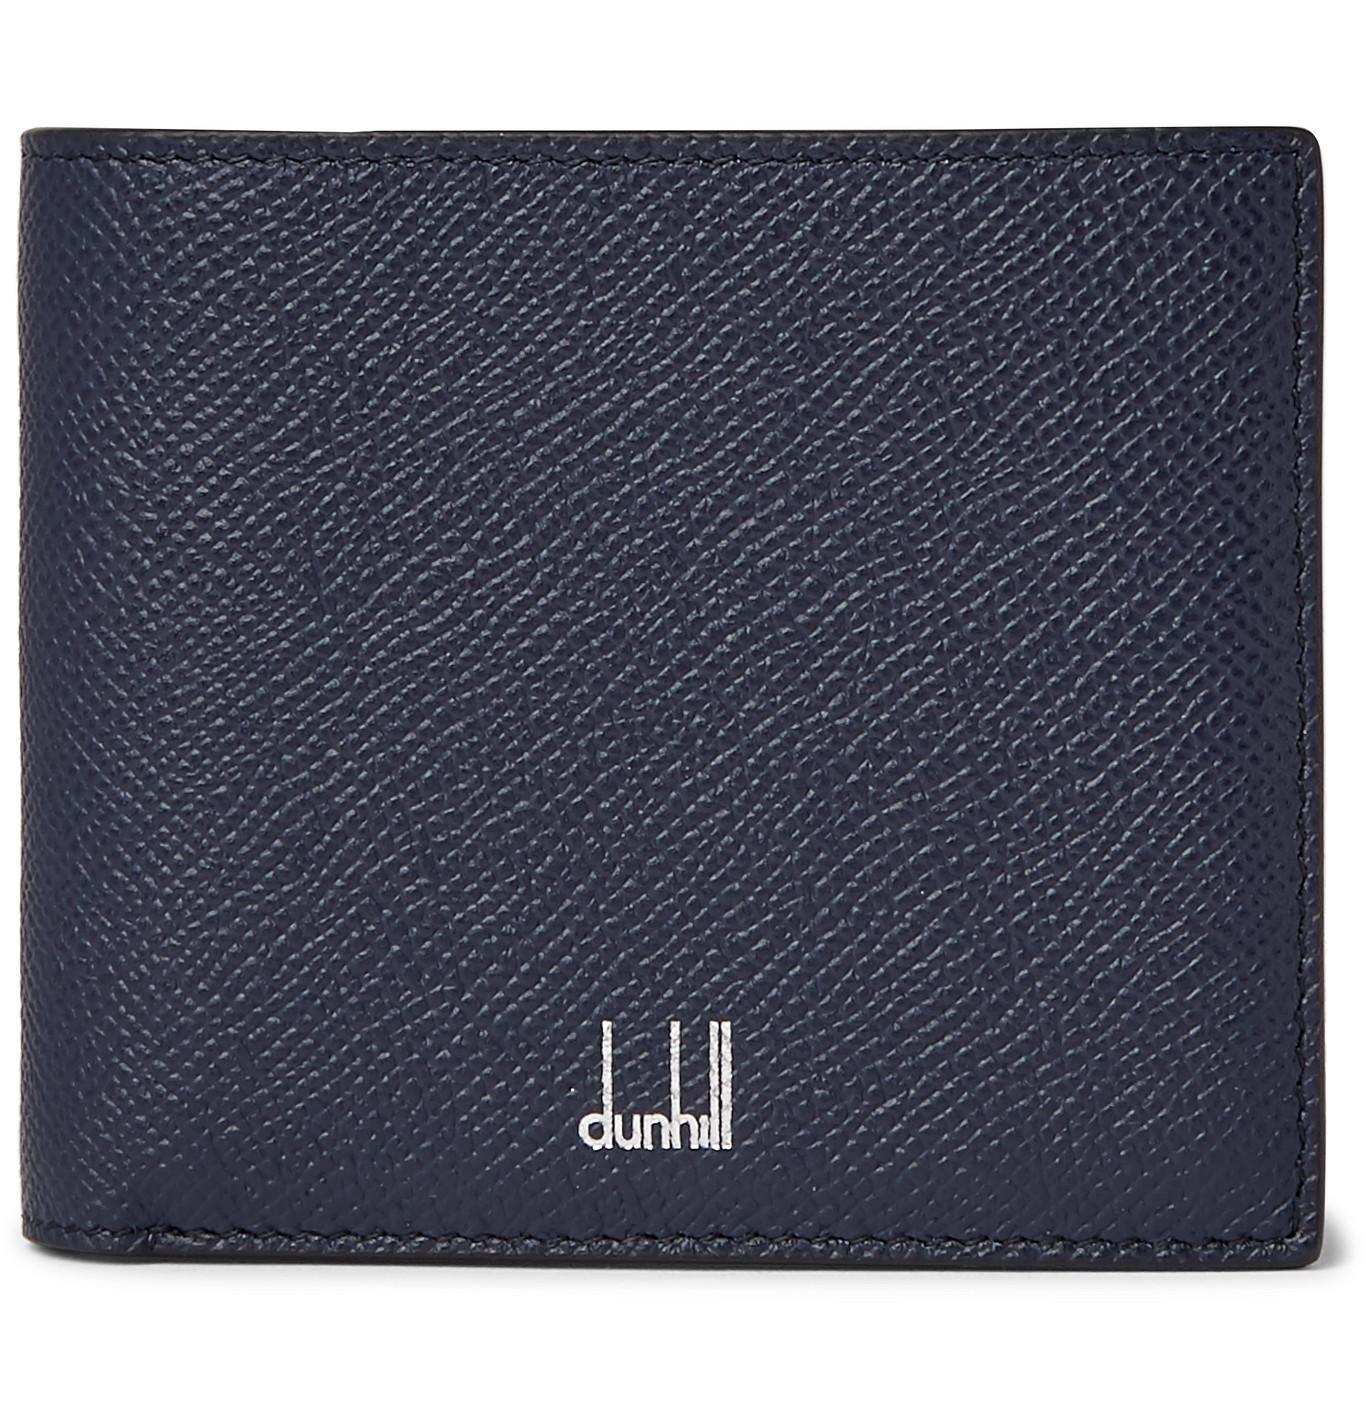 Dunhill Full-grain Leather Billfold Wallet in Blue for Men - Lyst